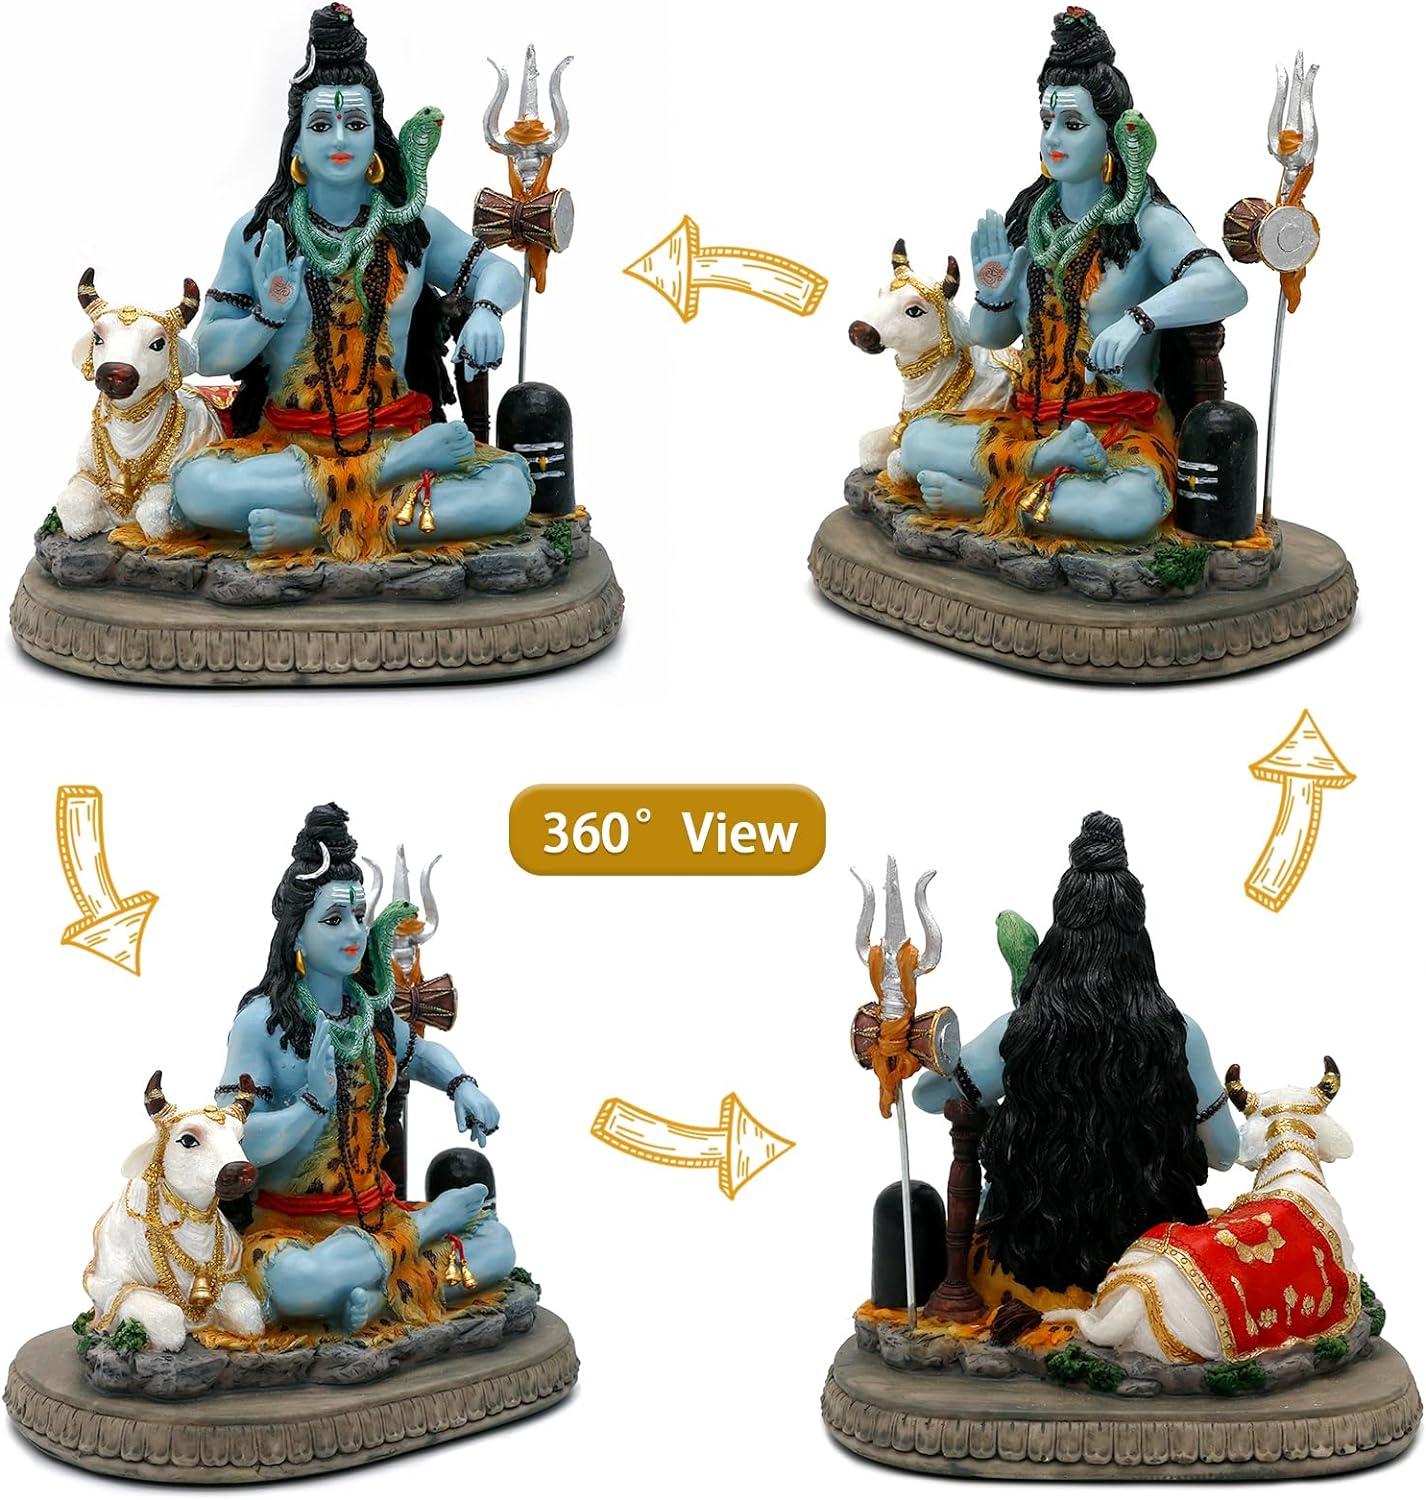 Indian God Lord Shiva Statue - Gifts for Indian Hindu 6.7H Shiva Idol Statue W/ Cow Indian Return Gifts for Guest Yoga Studio Meditation Room Spiritual Decor Home Office Mandir Altar Pooja Item